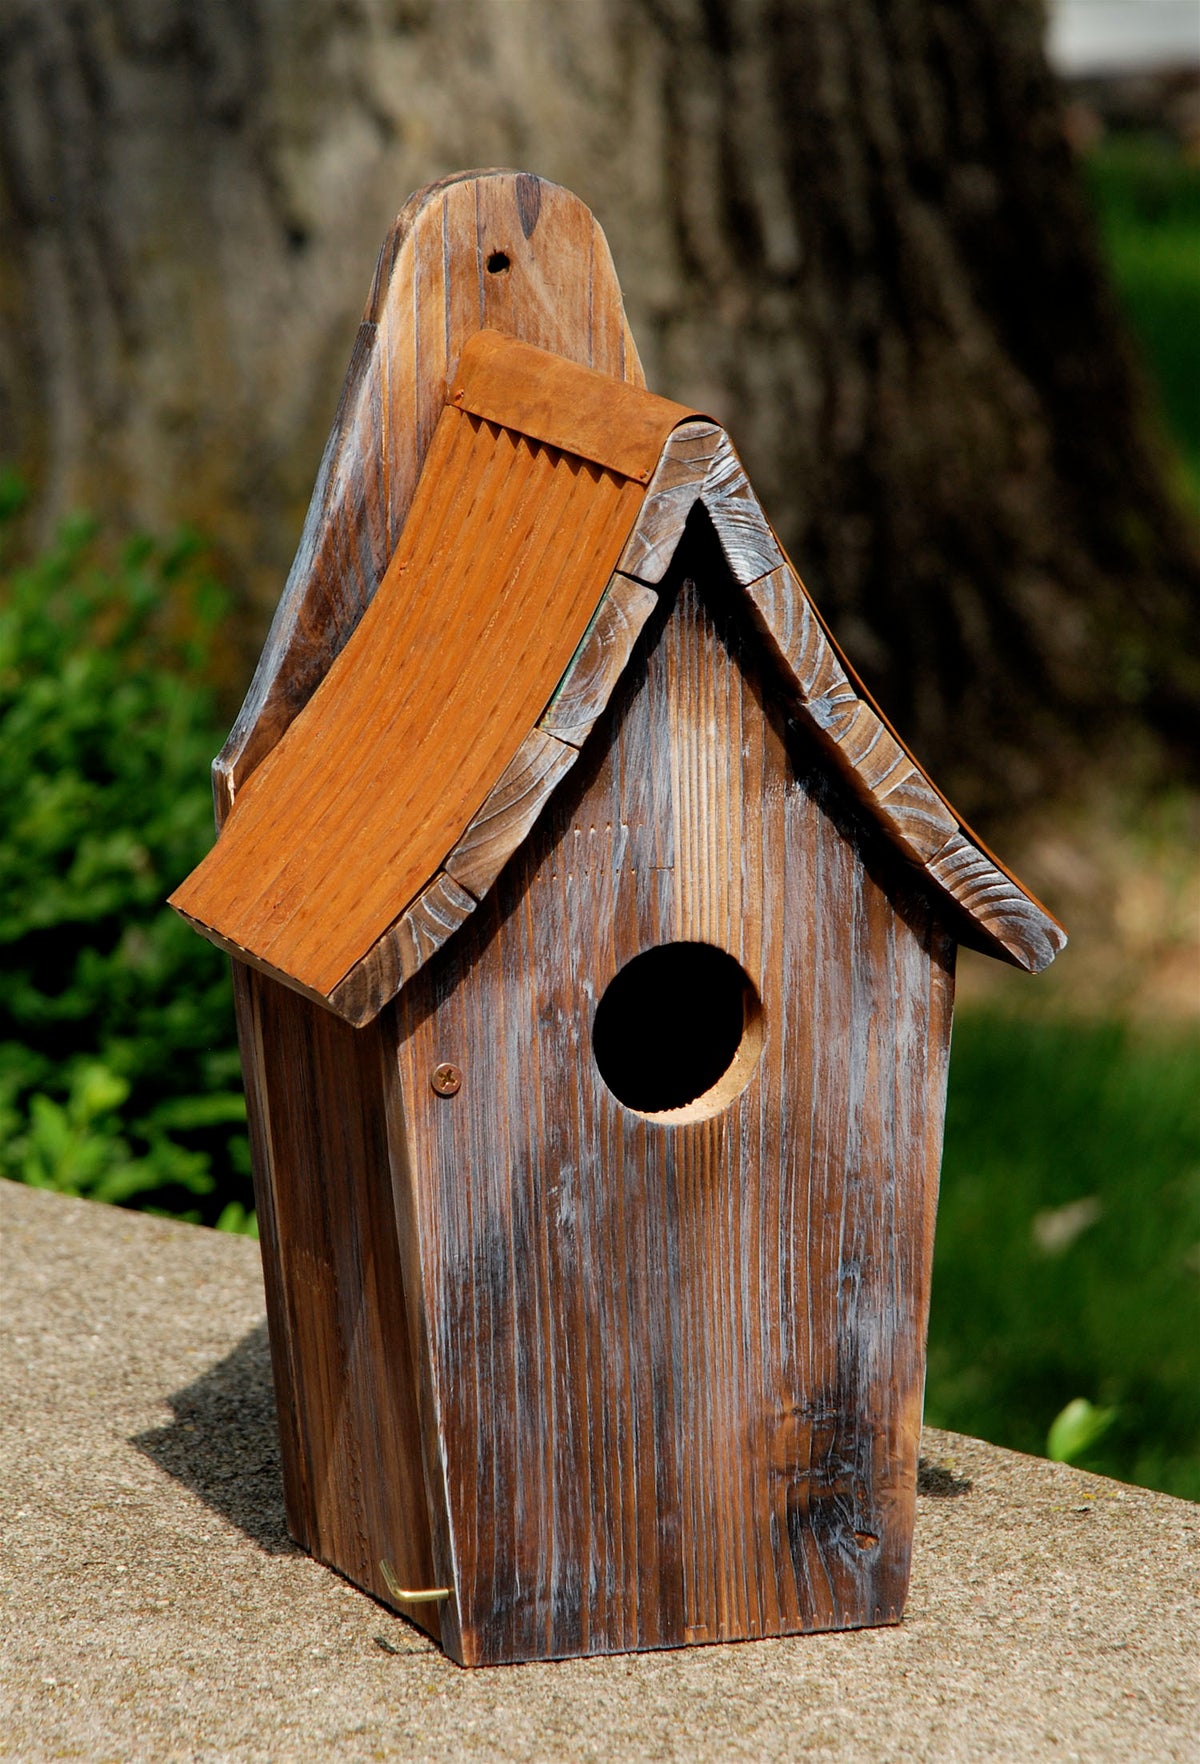 Woodlink Wooden Bird House